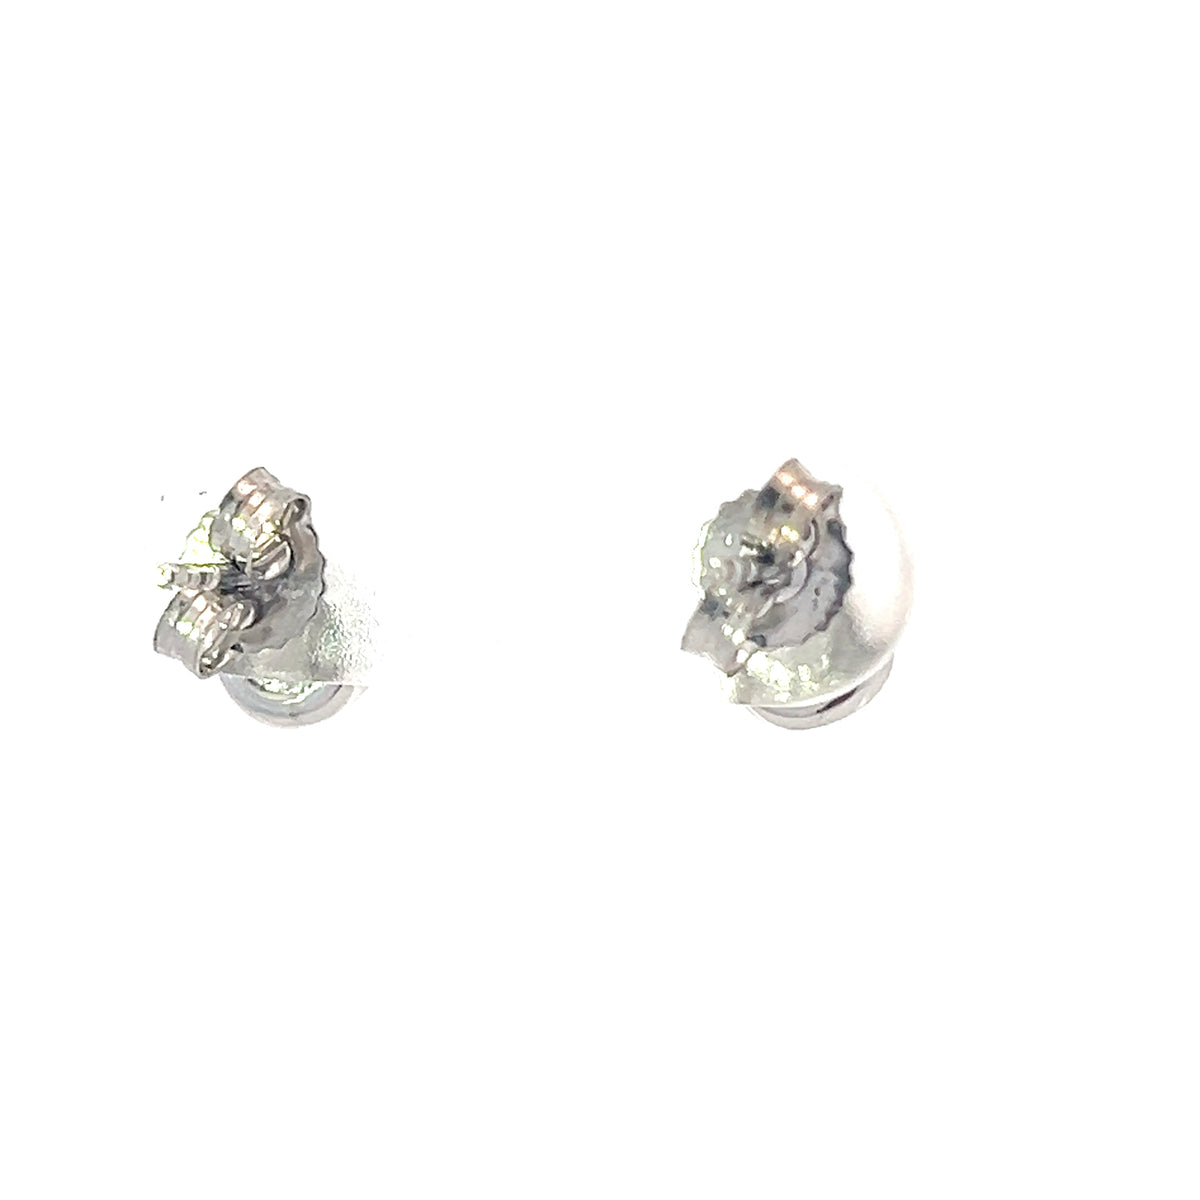 10K White Gold 0.30cttw Round Brilliant Cut Canadian Diamond Earrings